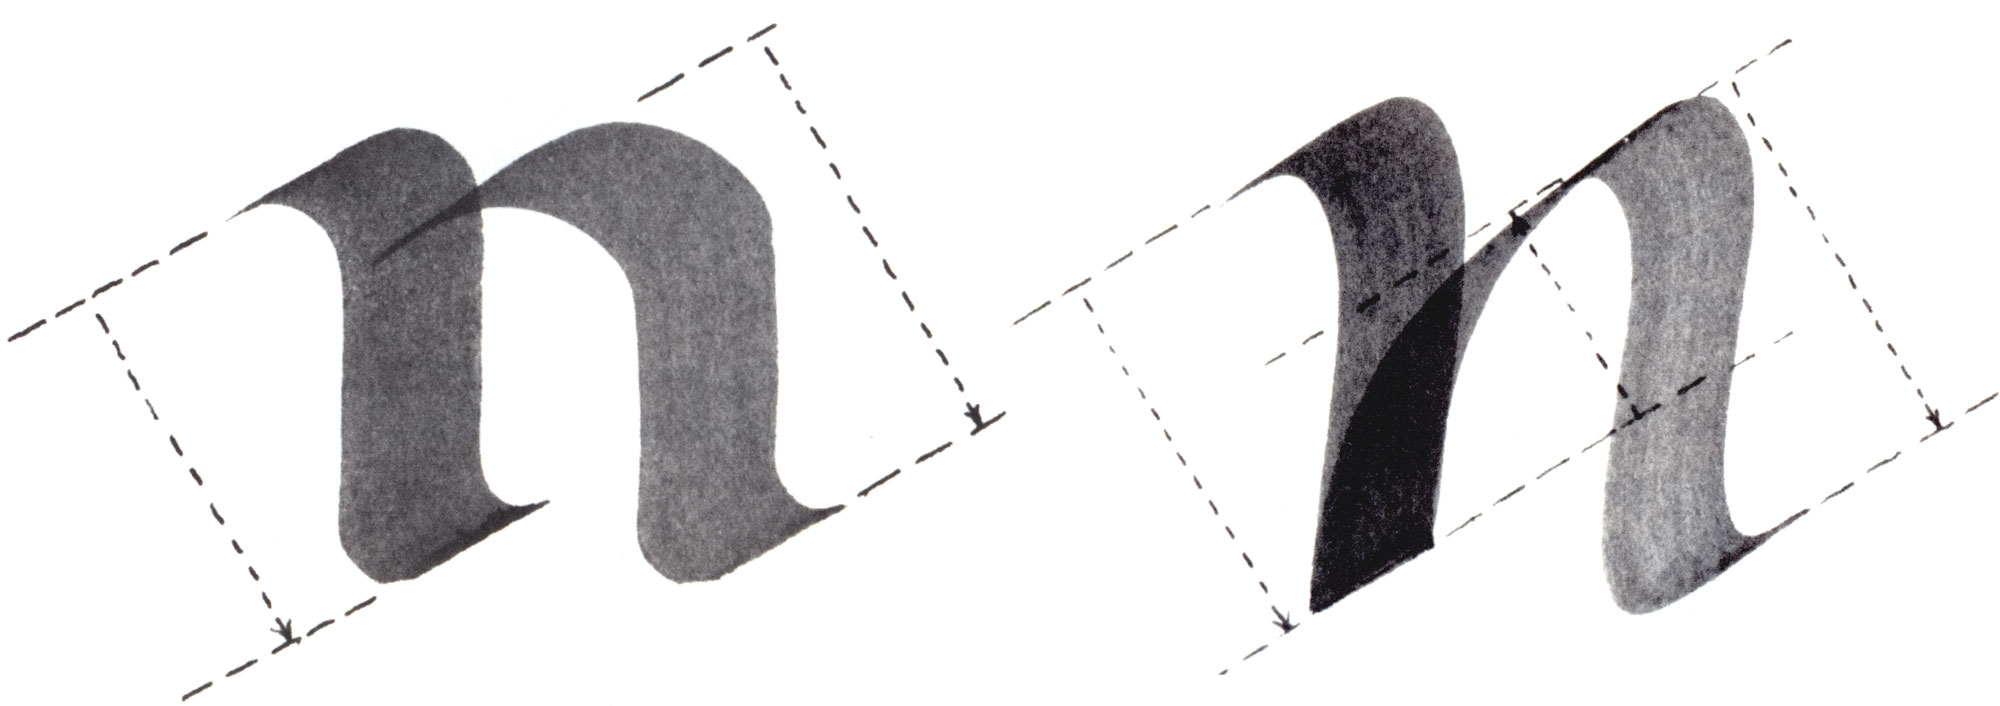 Noordzij, The Stroke, pen diagram